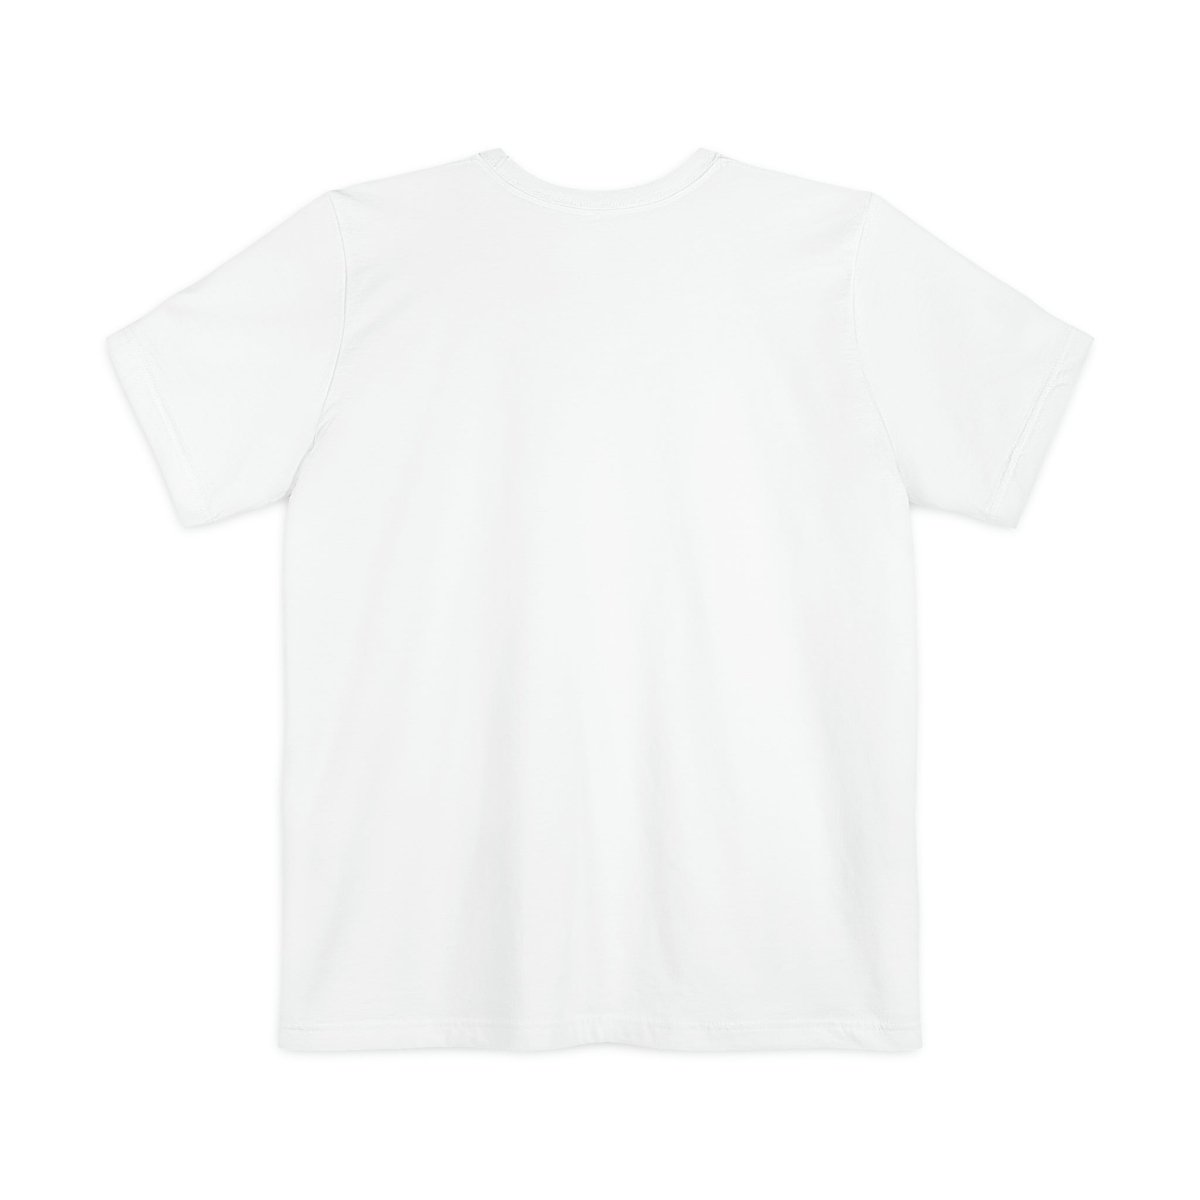 Royal Cat Pocket T-shirt - Style D - DarzyStore